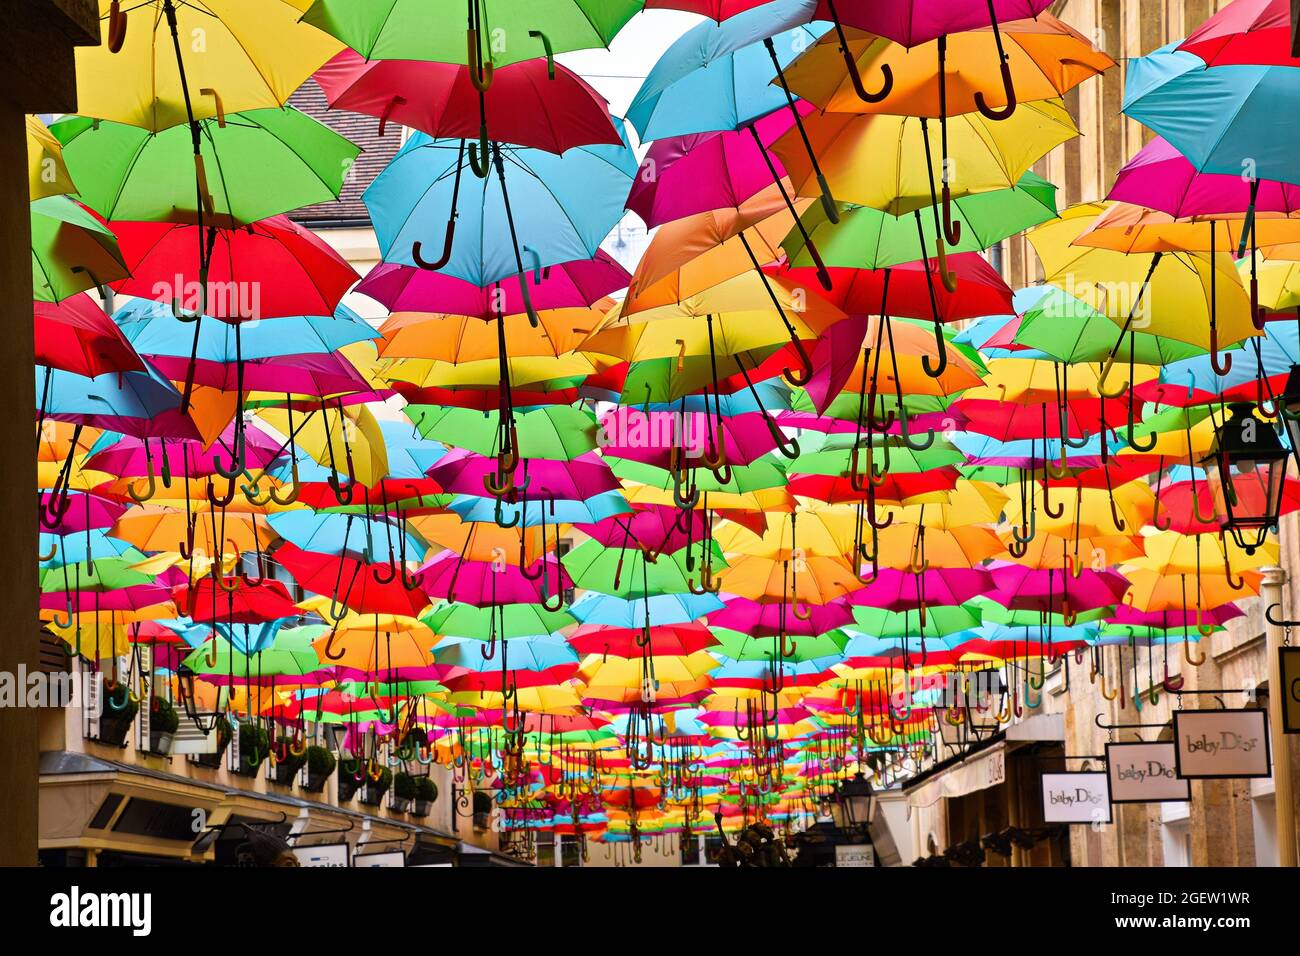 Bunte Regenschirme in Paris, Frankreich, Europa Stockfotografie - Alamy